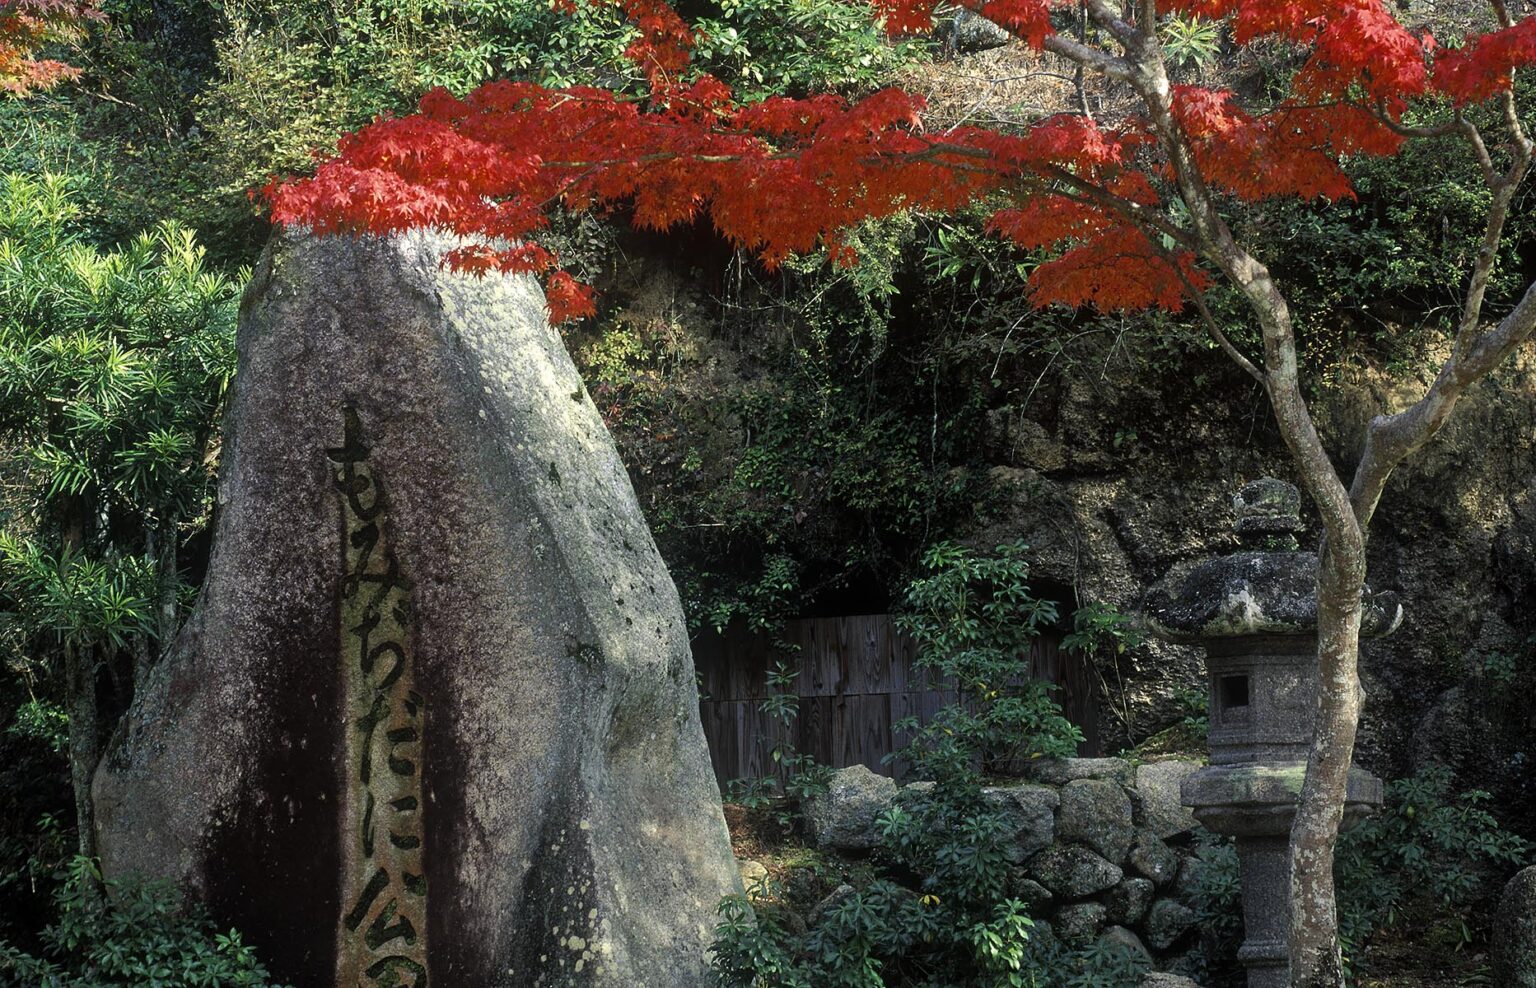 Large MEMORIAL STONE with JAPANESE RED MAPLE - MIYA JIMA ISLAND, JAPAN